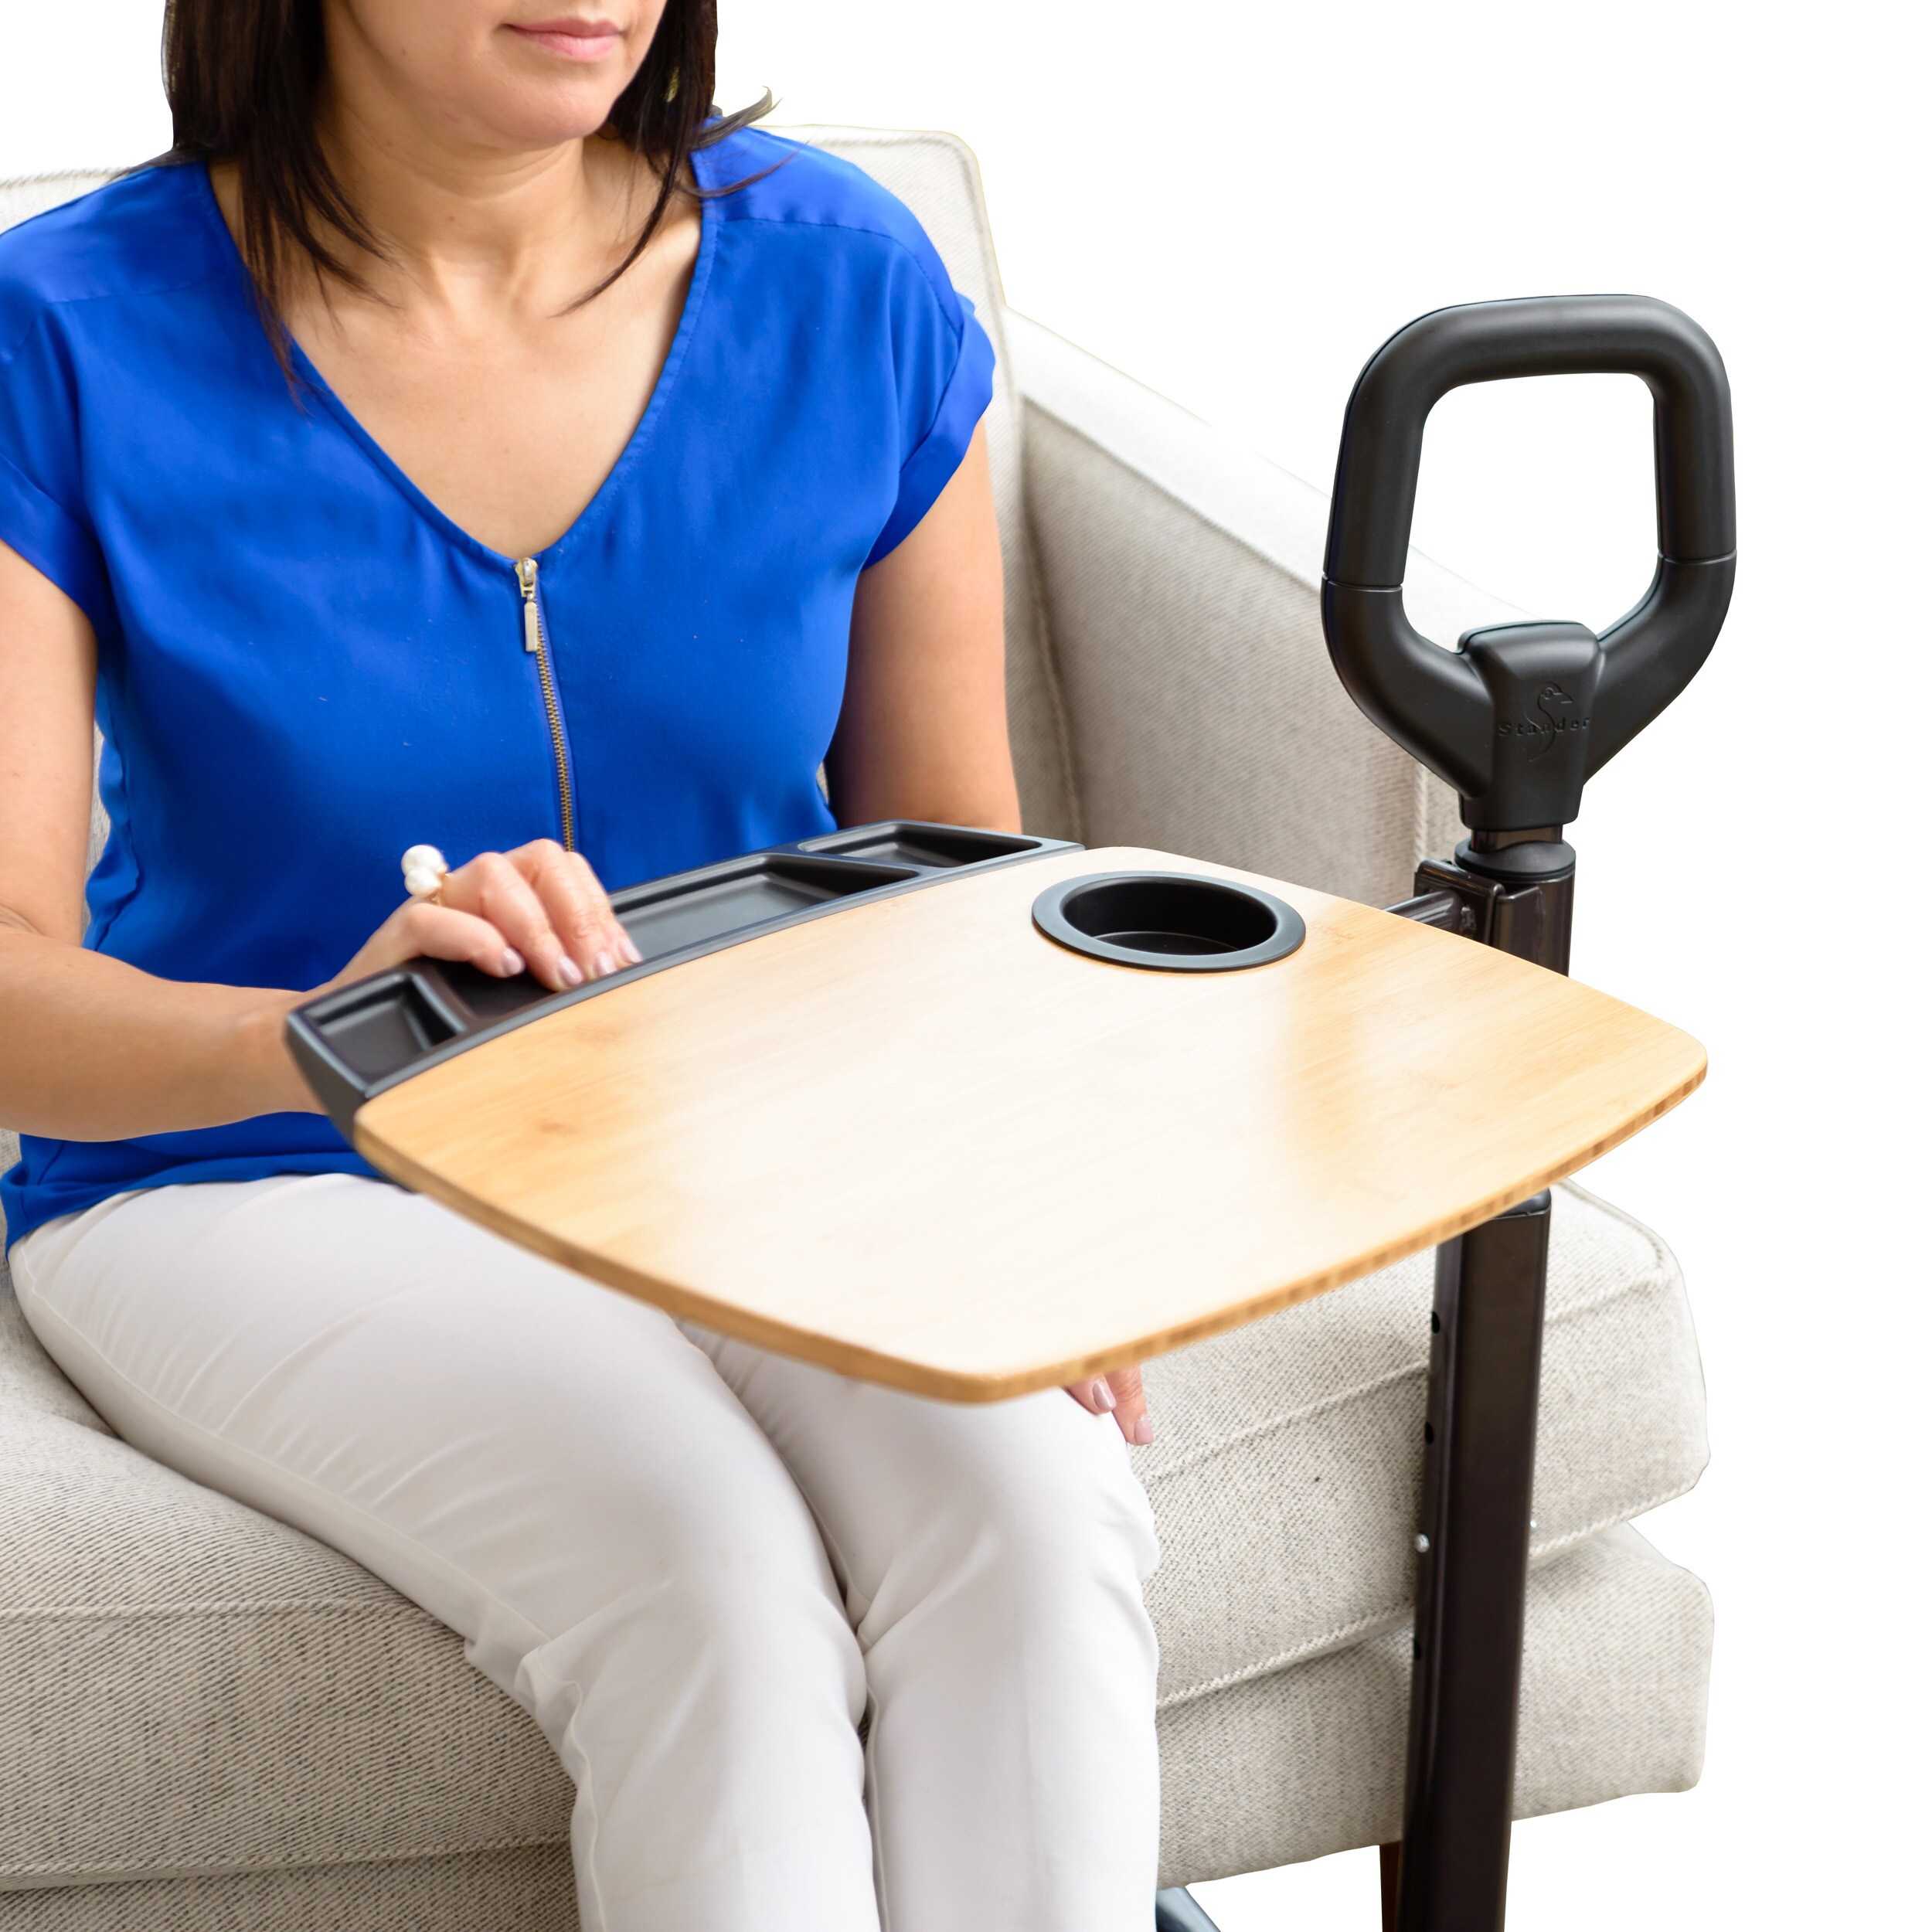 Stander CouchCane - Ergonomic Safety Support Handle Adjustable for